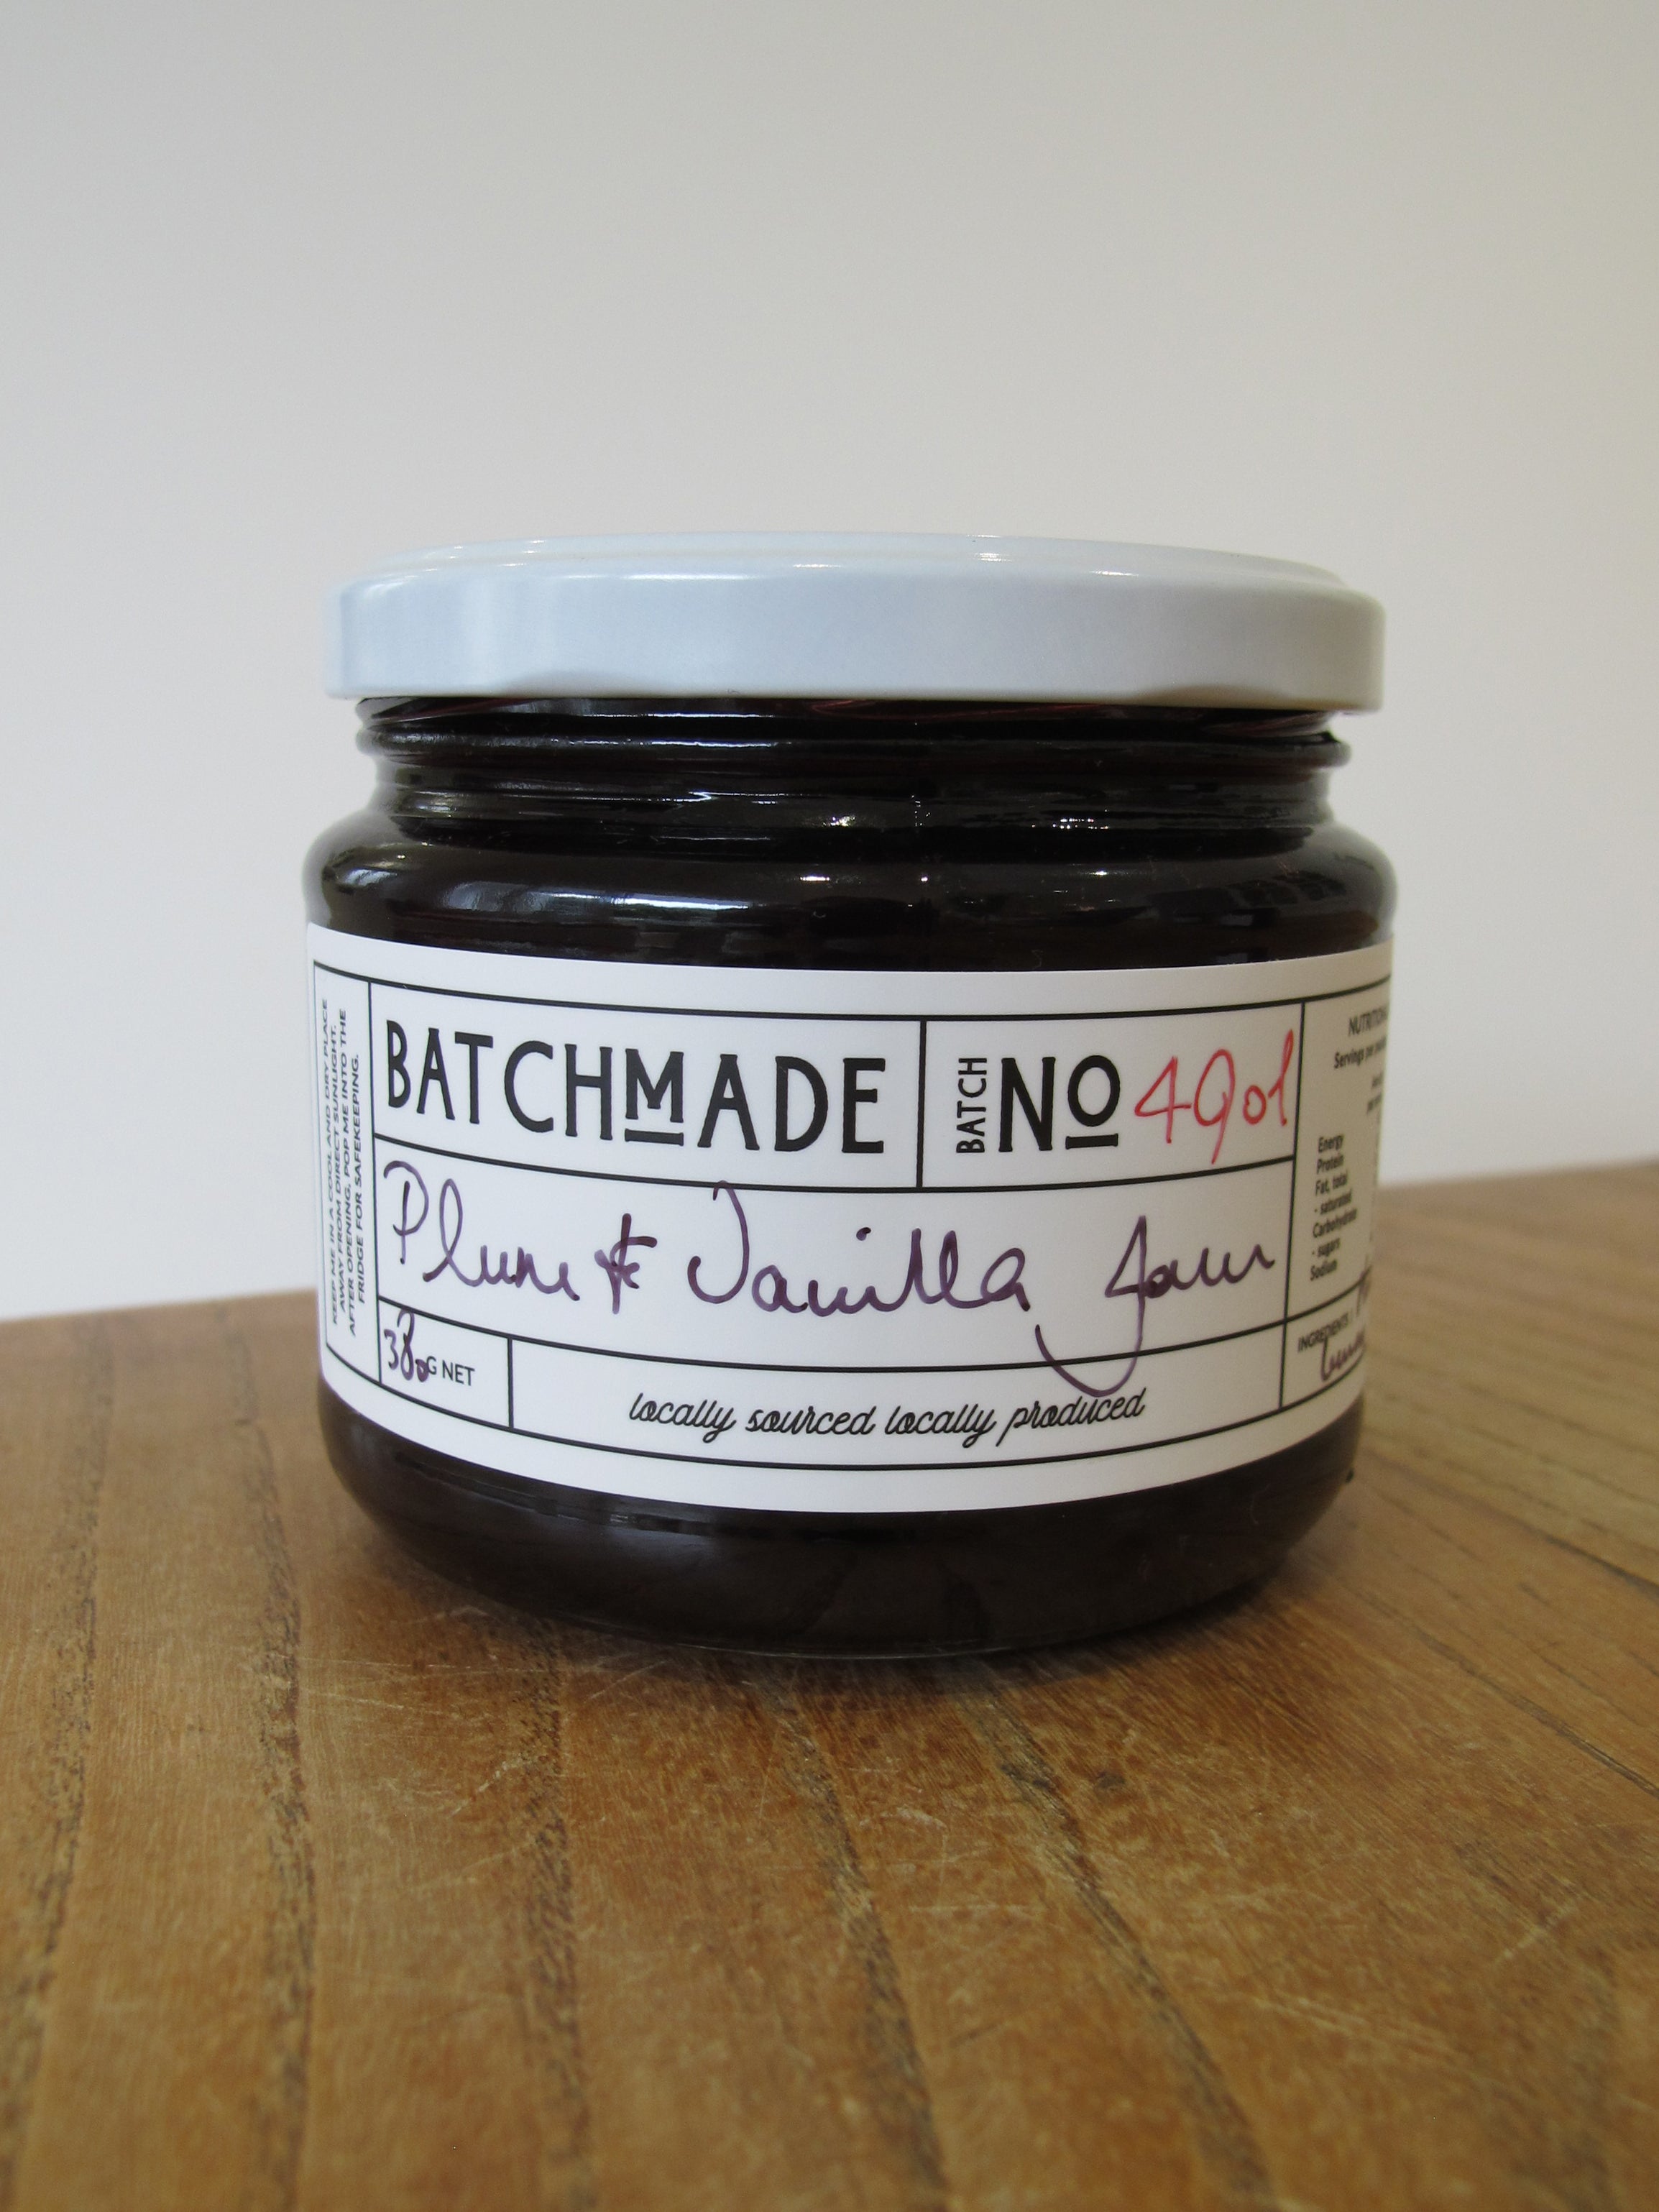 BatchMade plum and vanilla jam